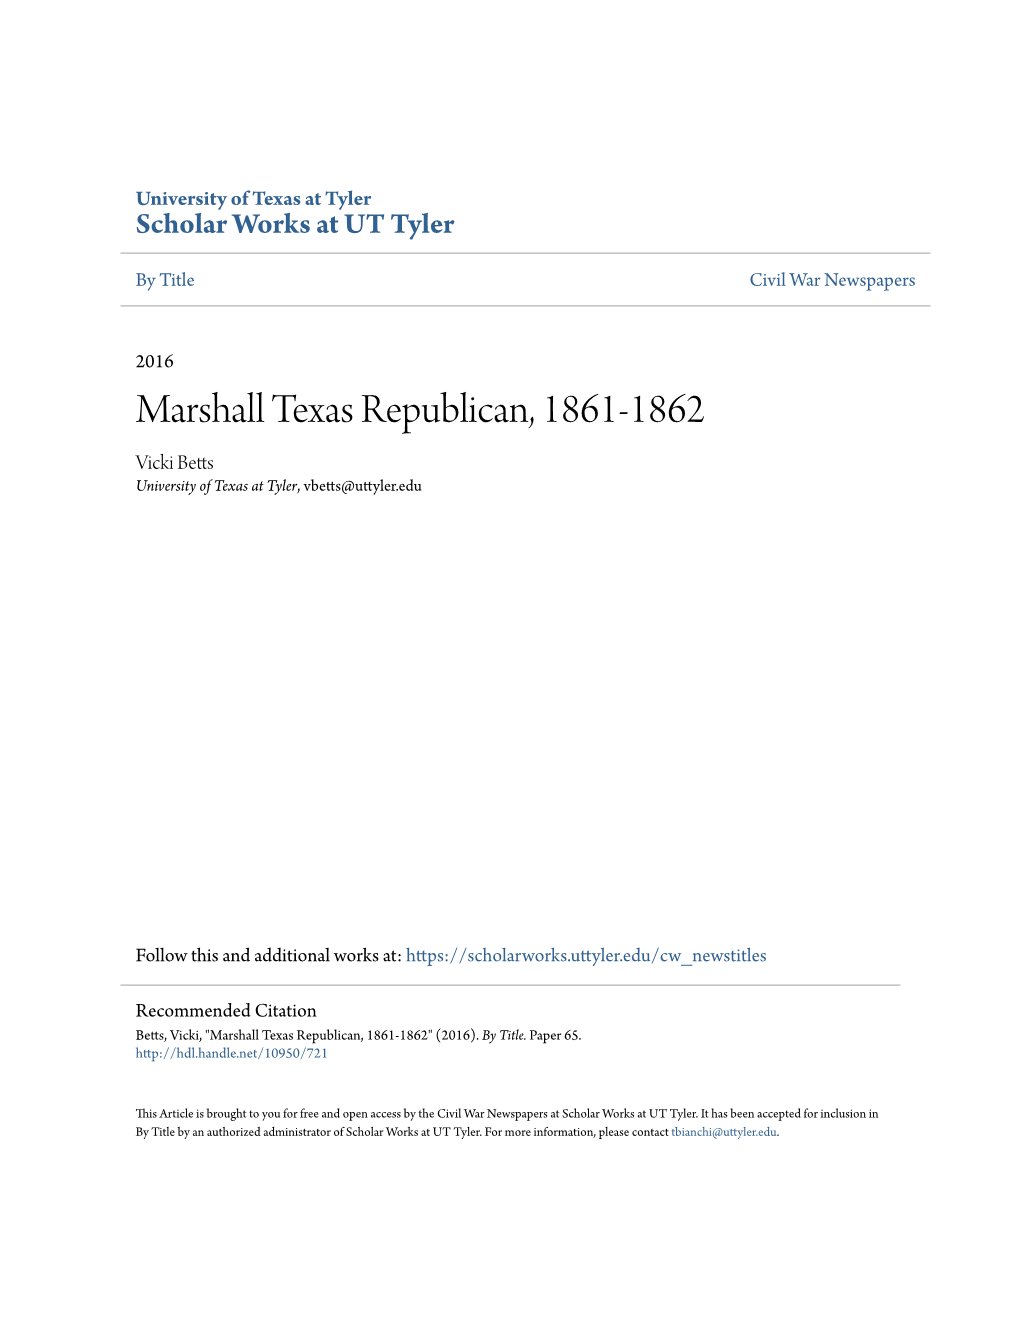 Marshall Texas Republican, 1861-1862 Vicki Betts University of Texas at Tyler, Vbetts@Uttyler.Edu